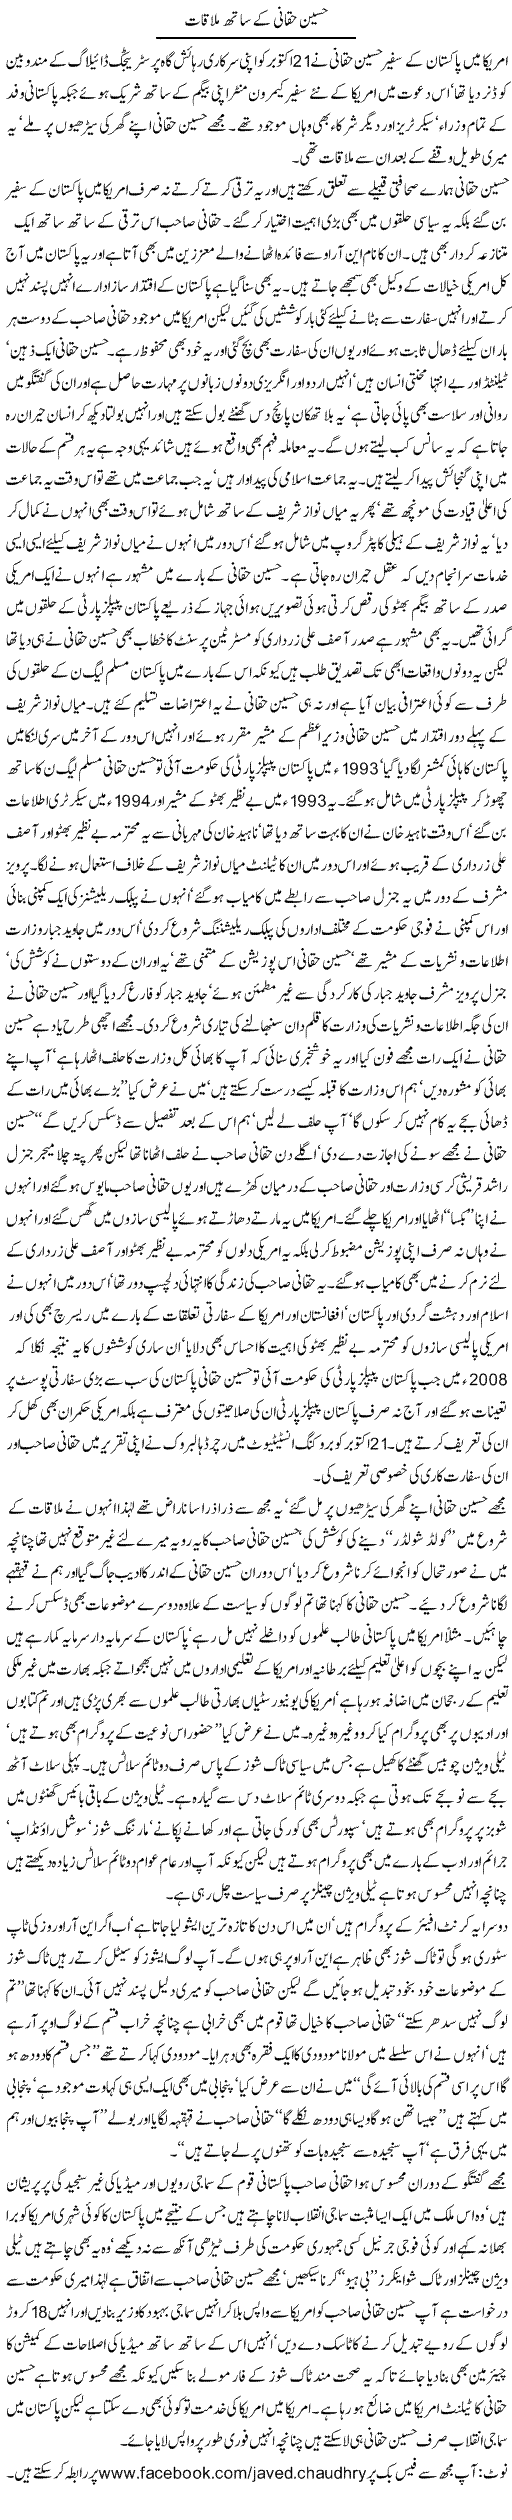 Meeting With Haqqani Express Column Javed Chaudhry 28 October 2010